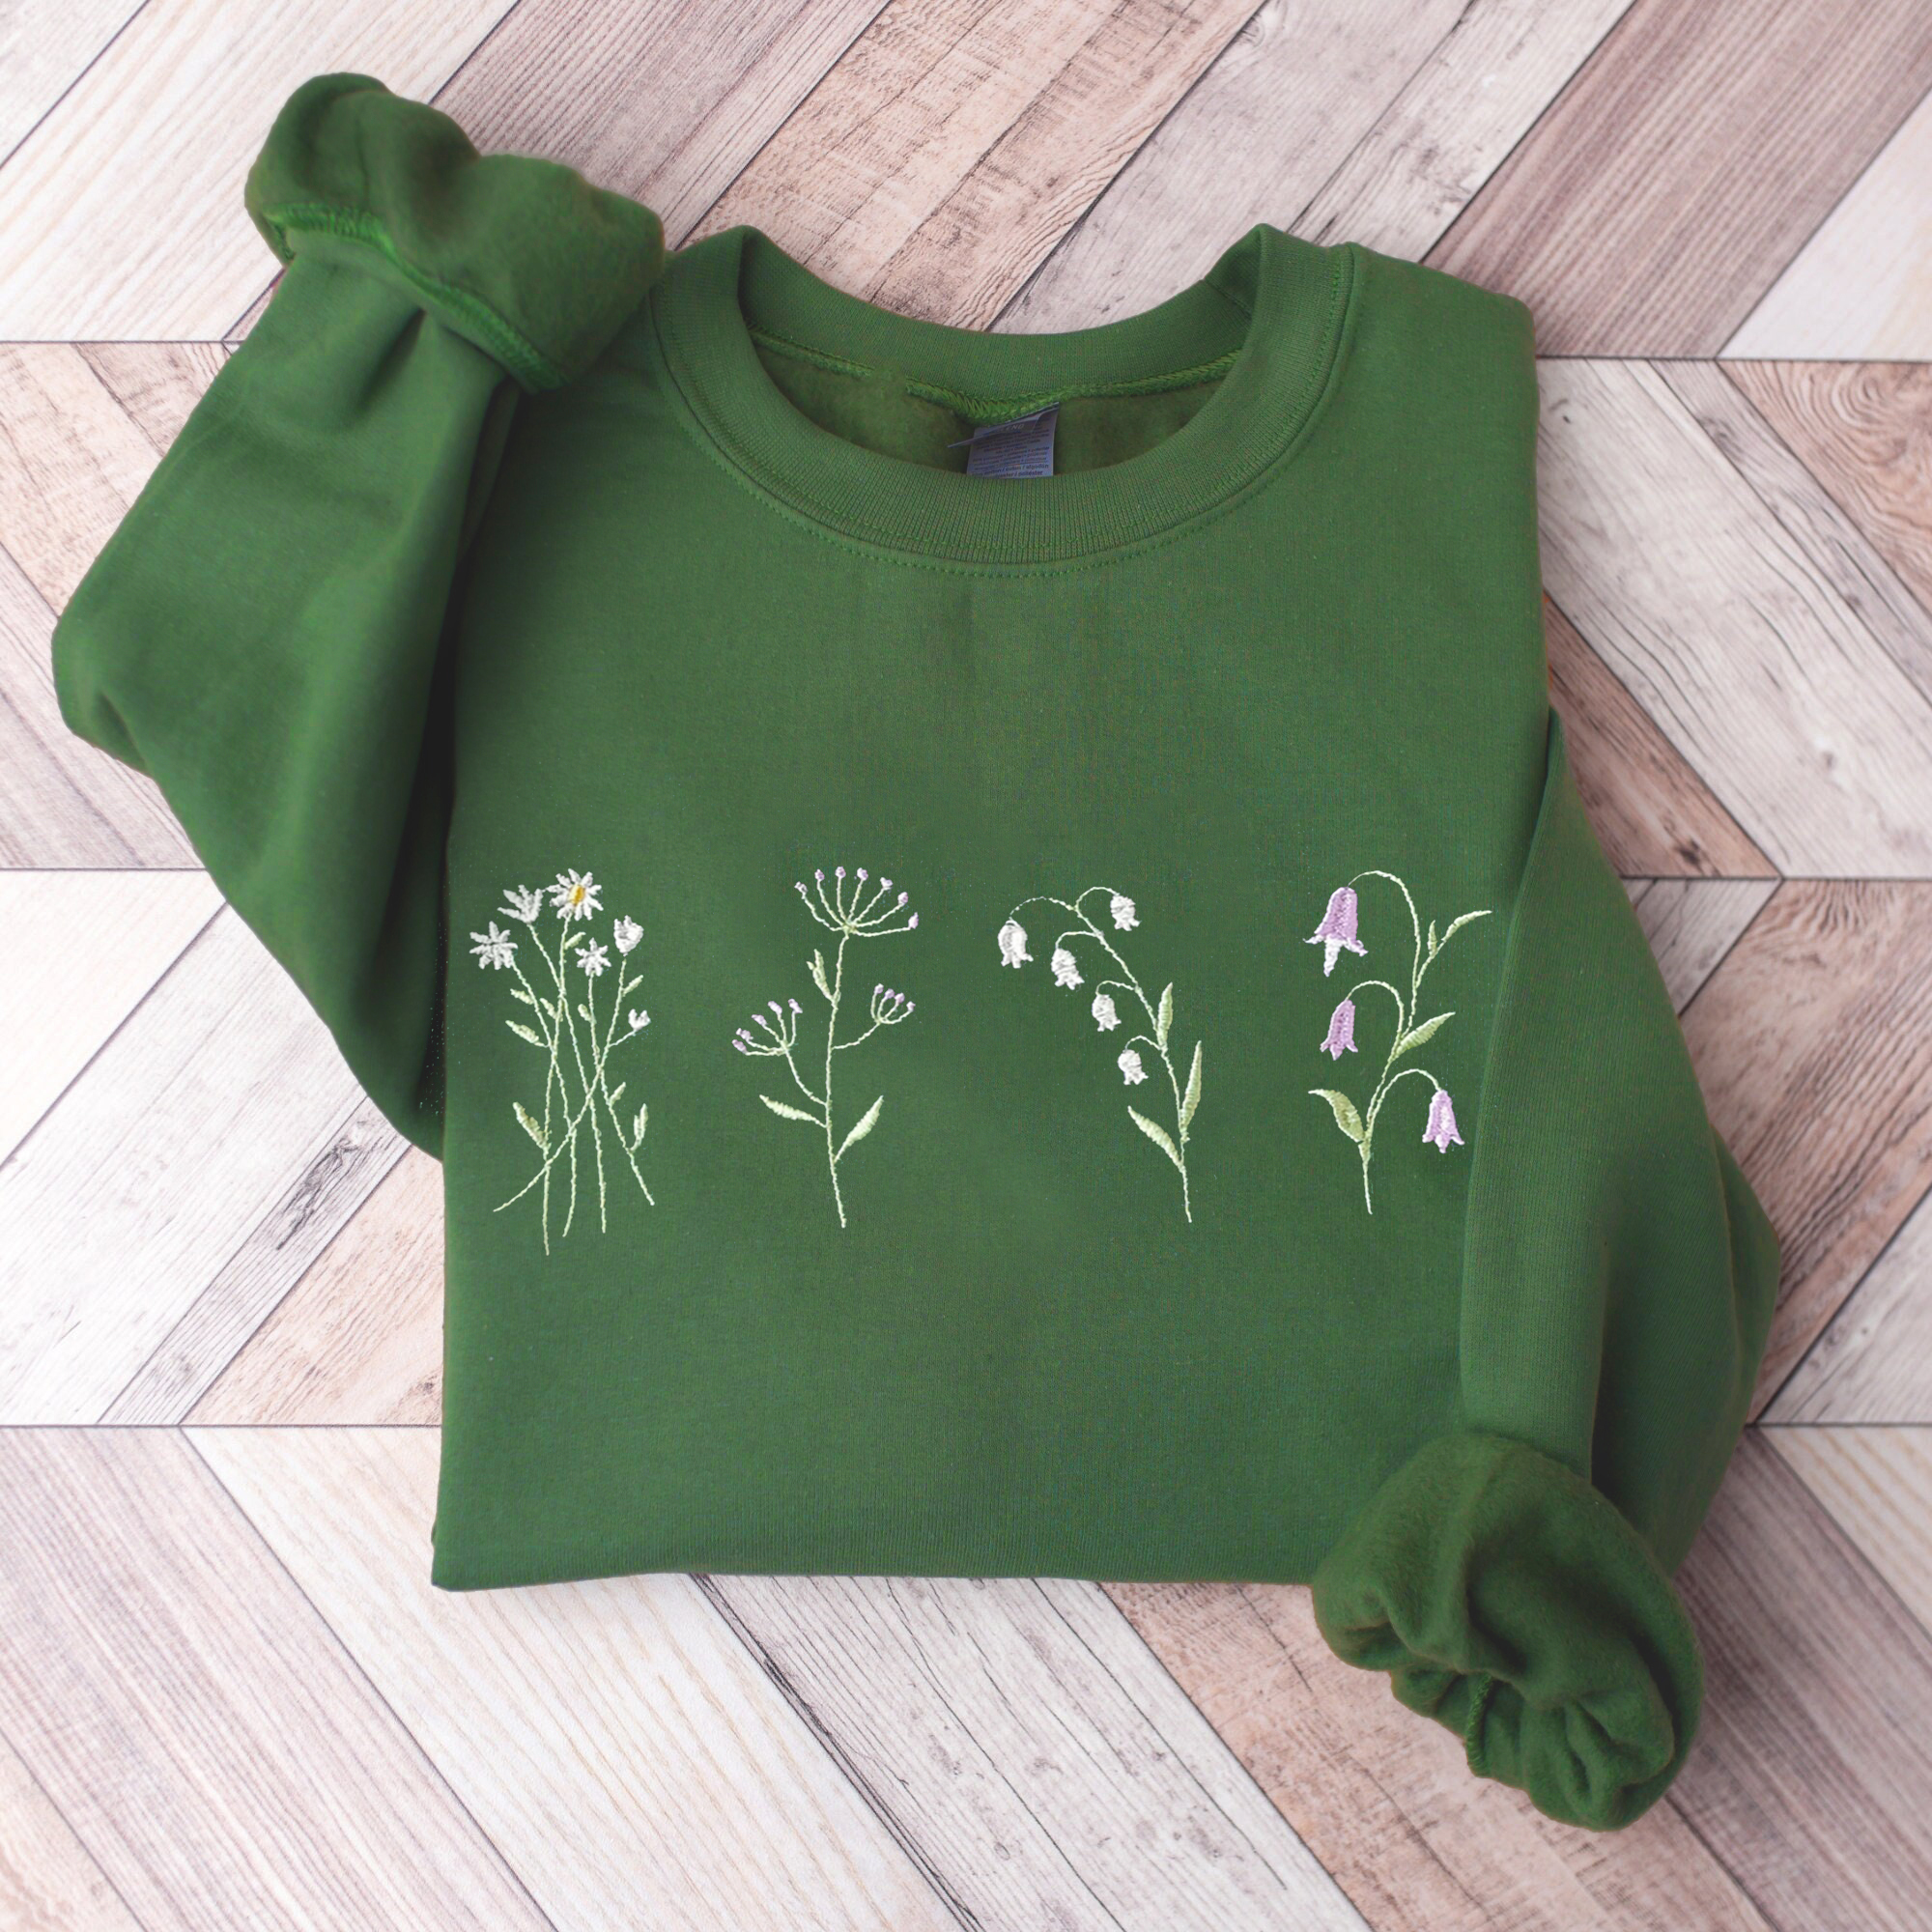 Floral embroidered sweatshirt